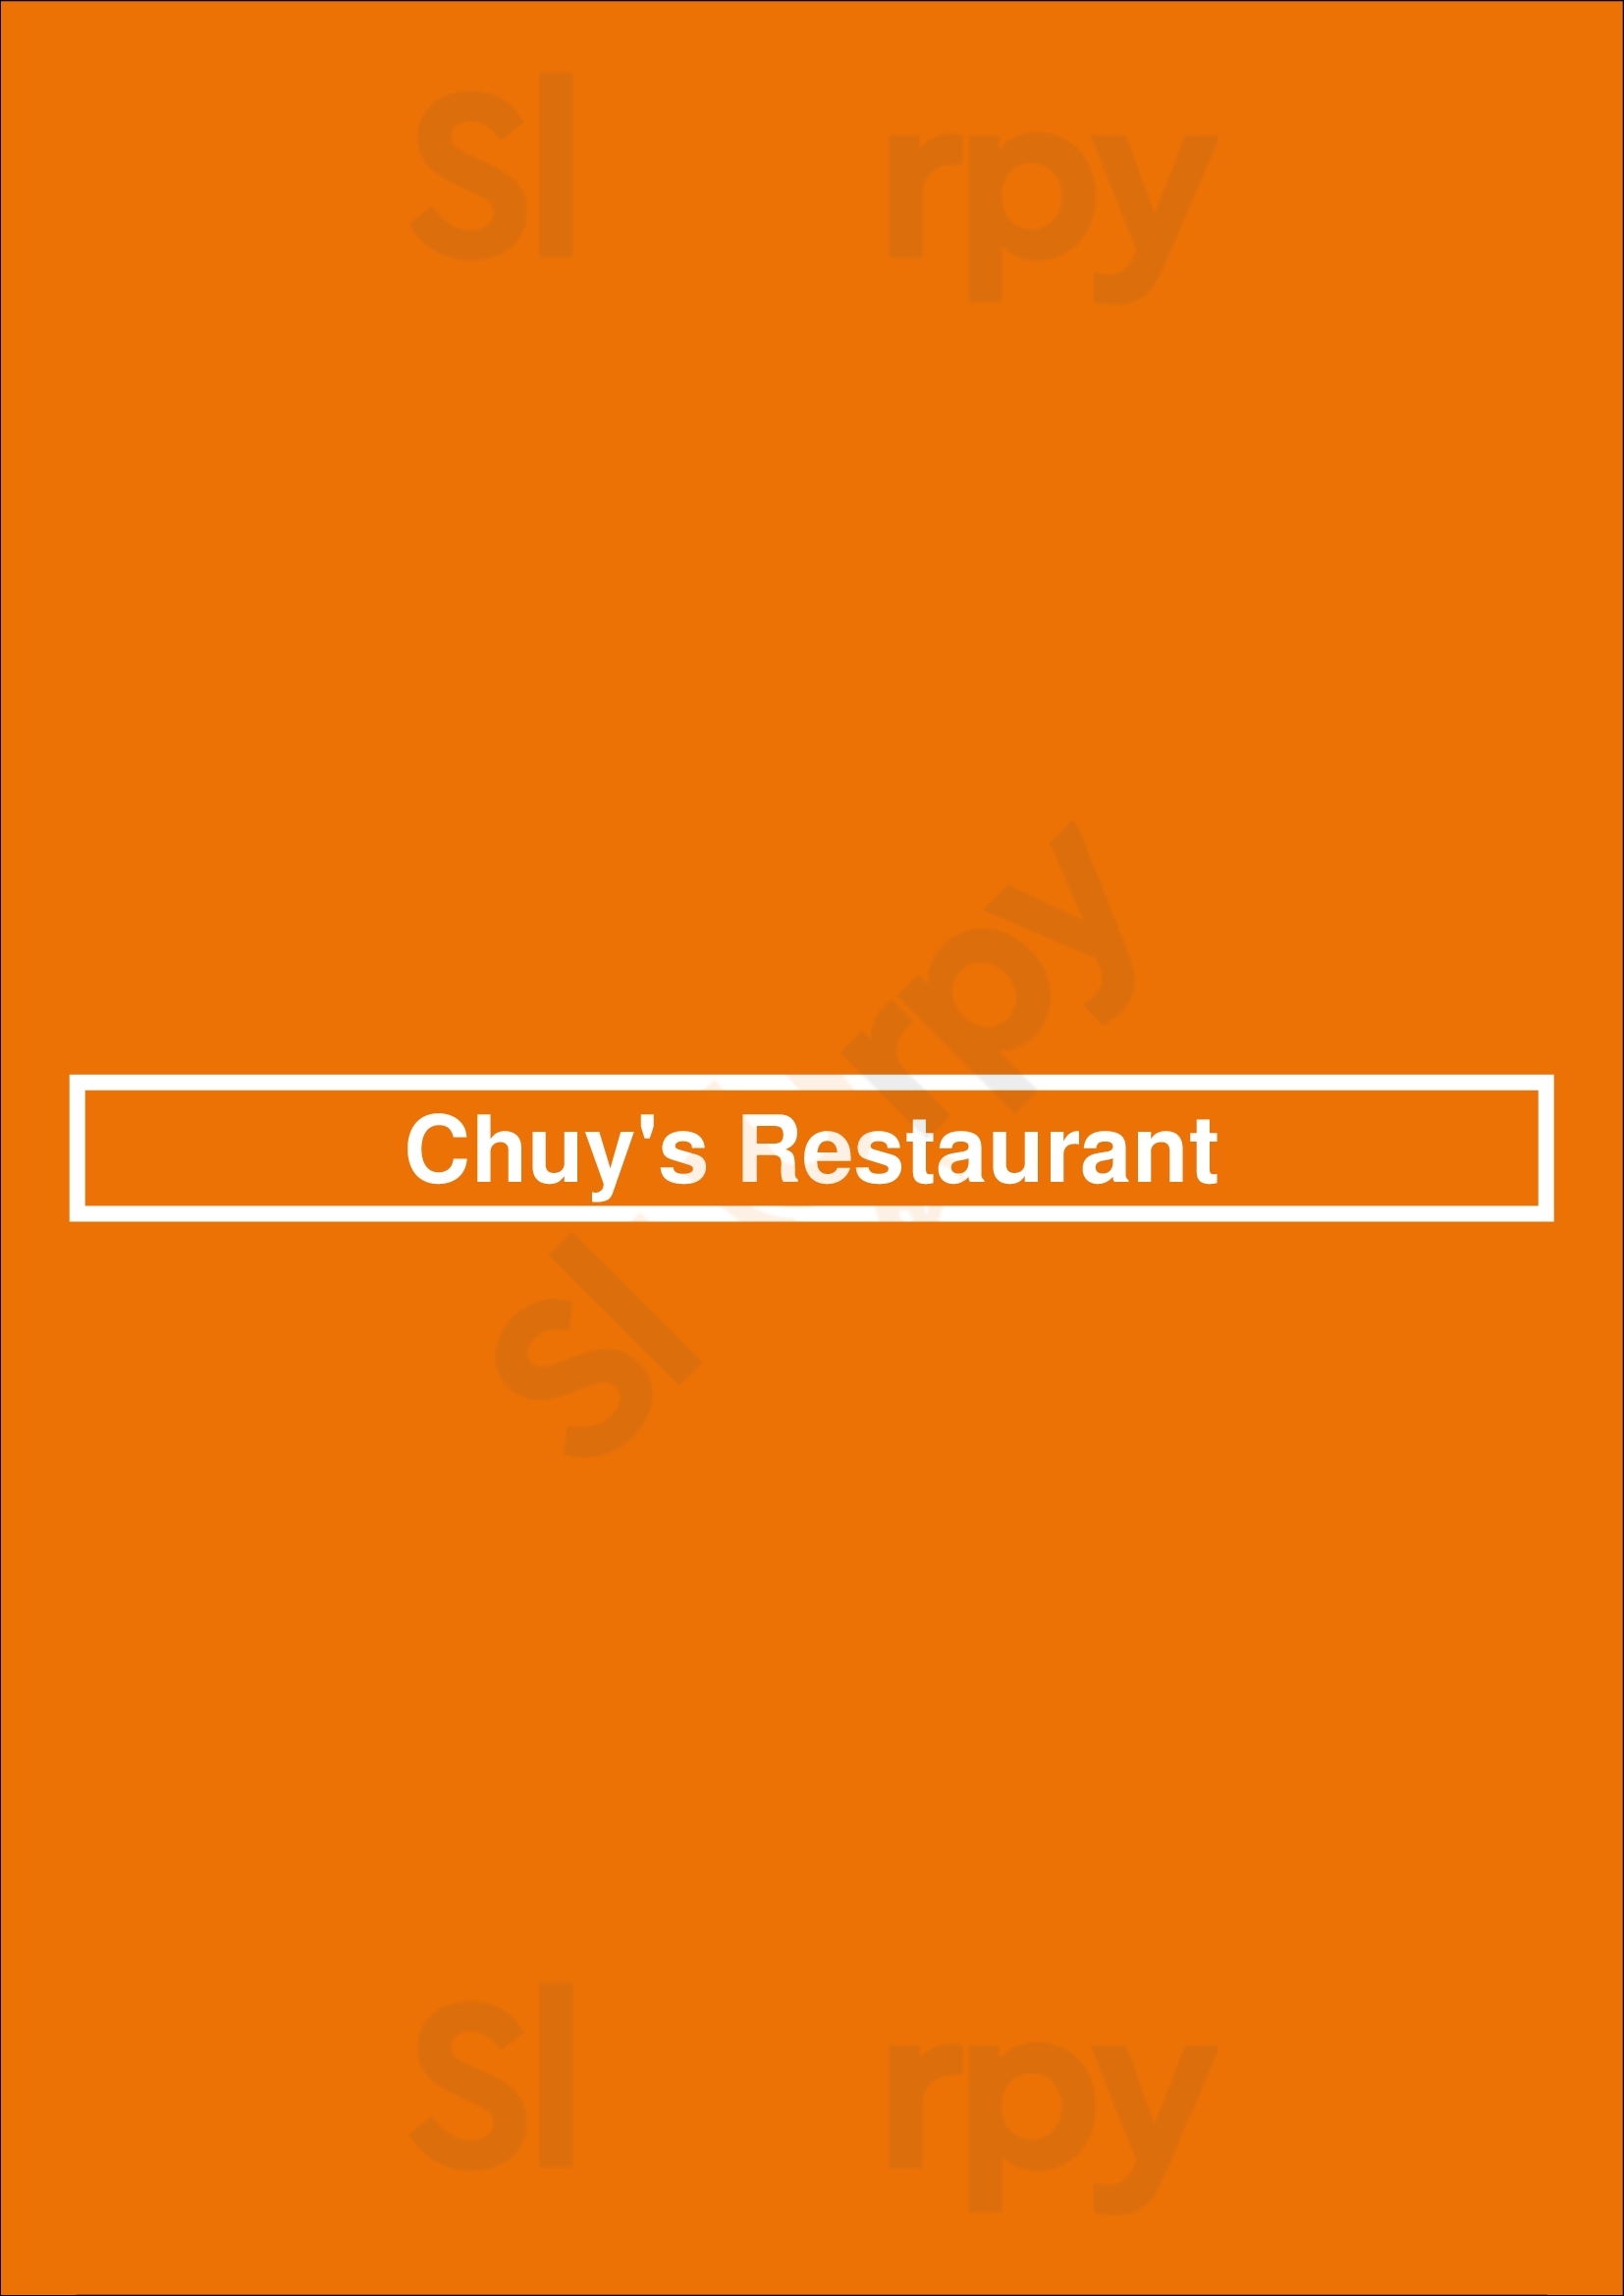 Chuy's Restaurant Houston Menu - 1